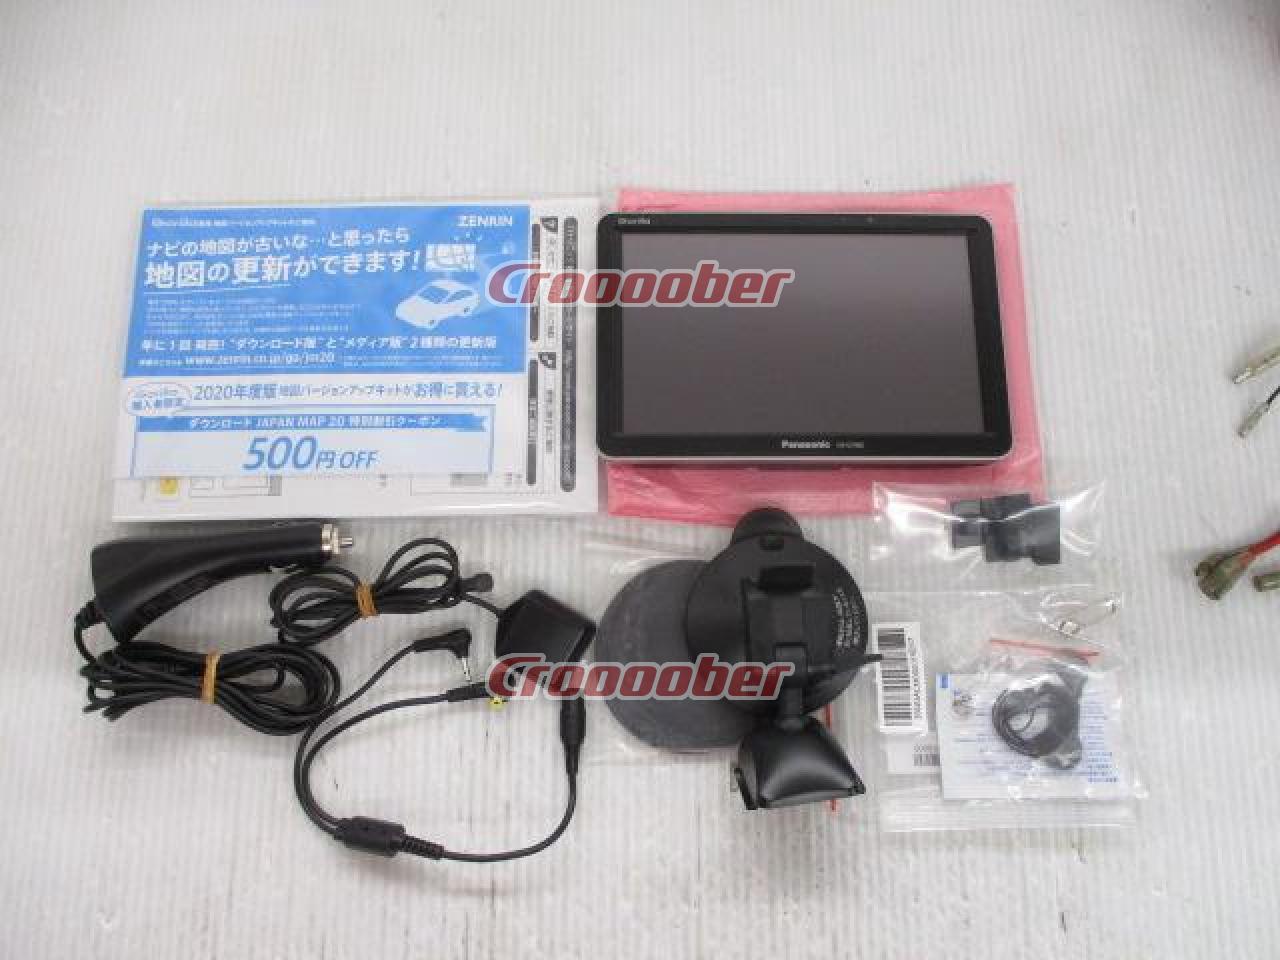 Panasonic Gorilla CN-G730D | Portable Navigation(analog) | Croooober